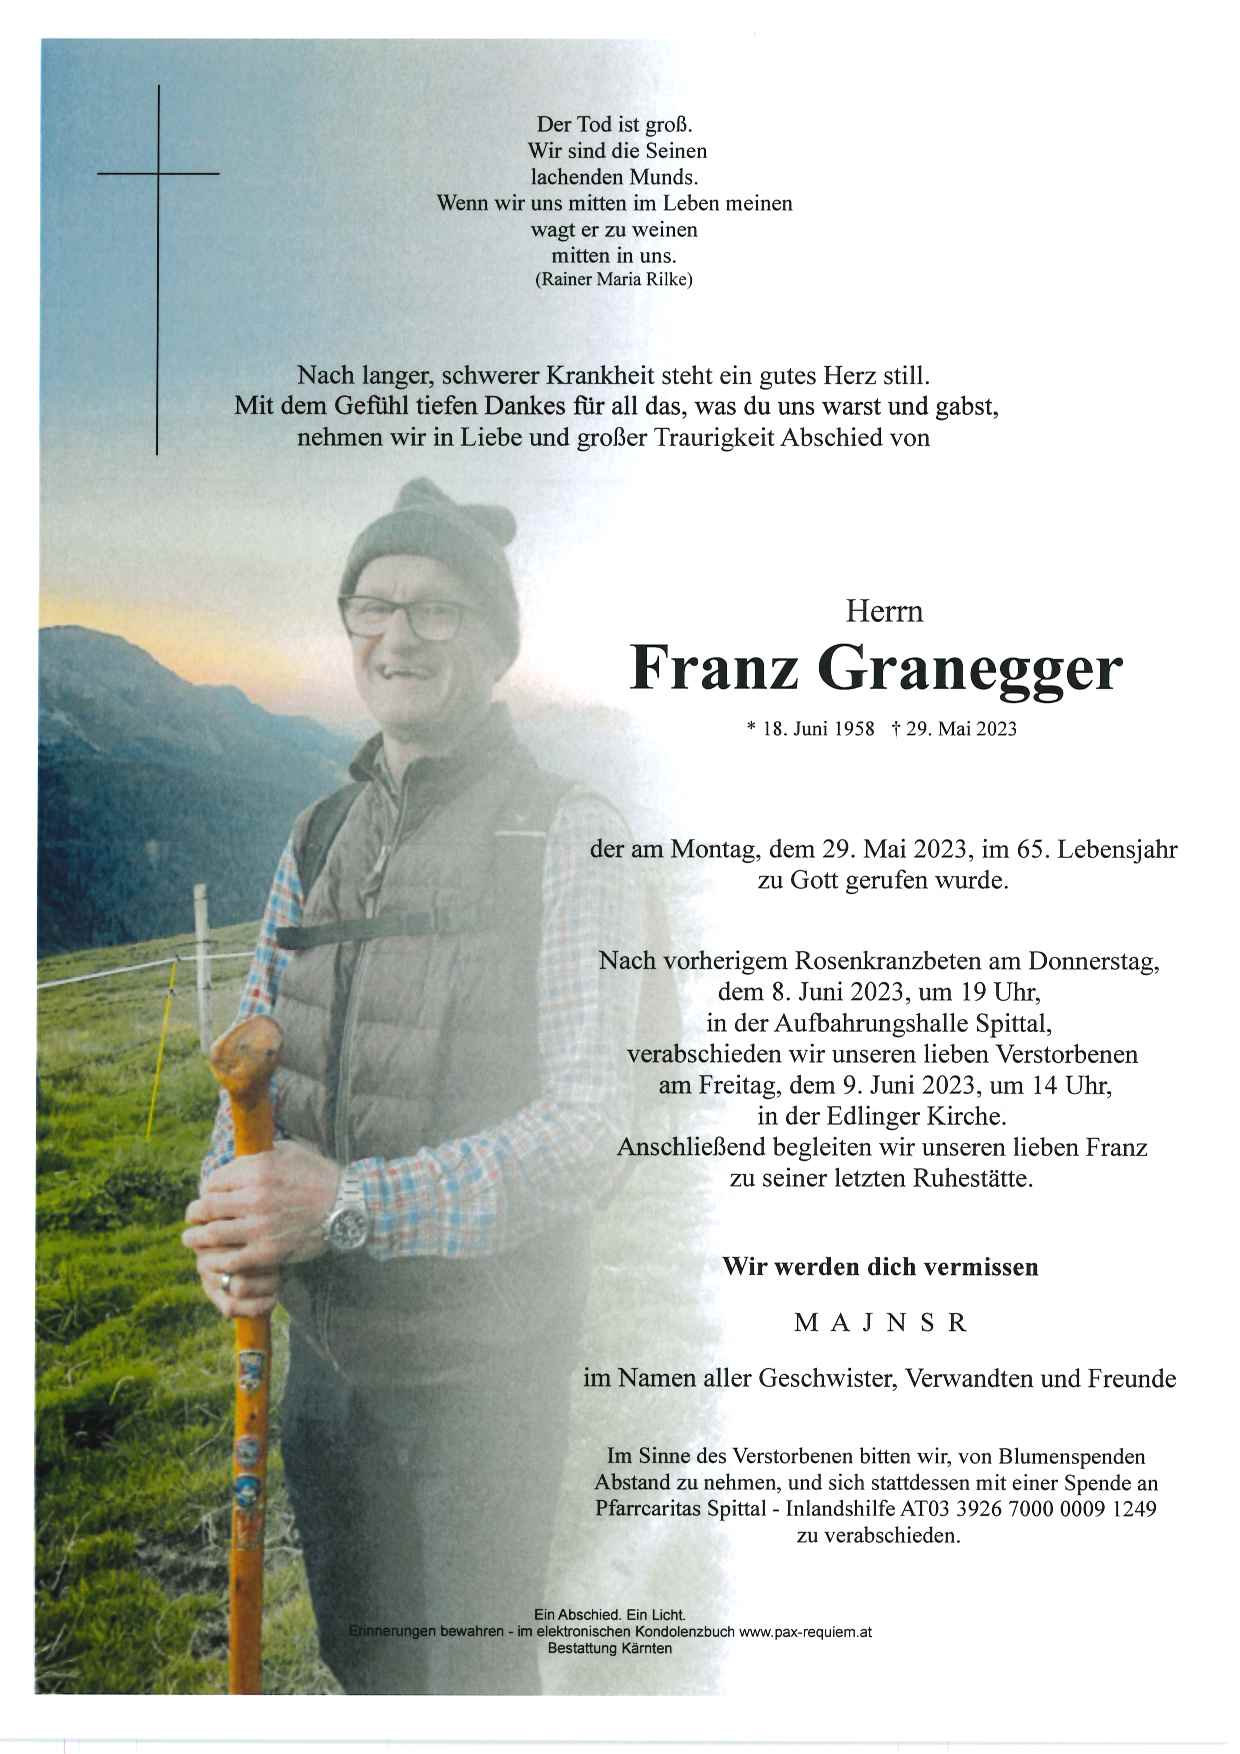 Franz Granegger